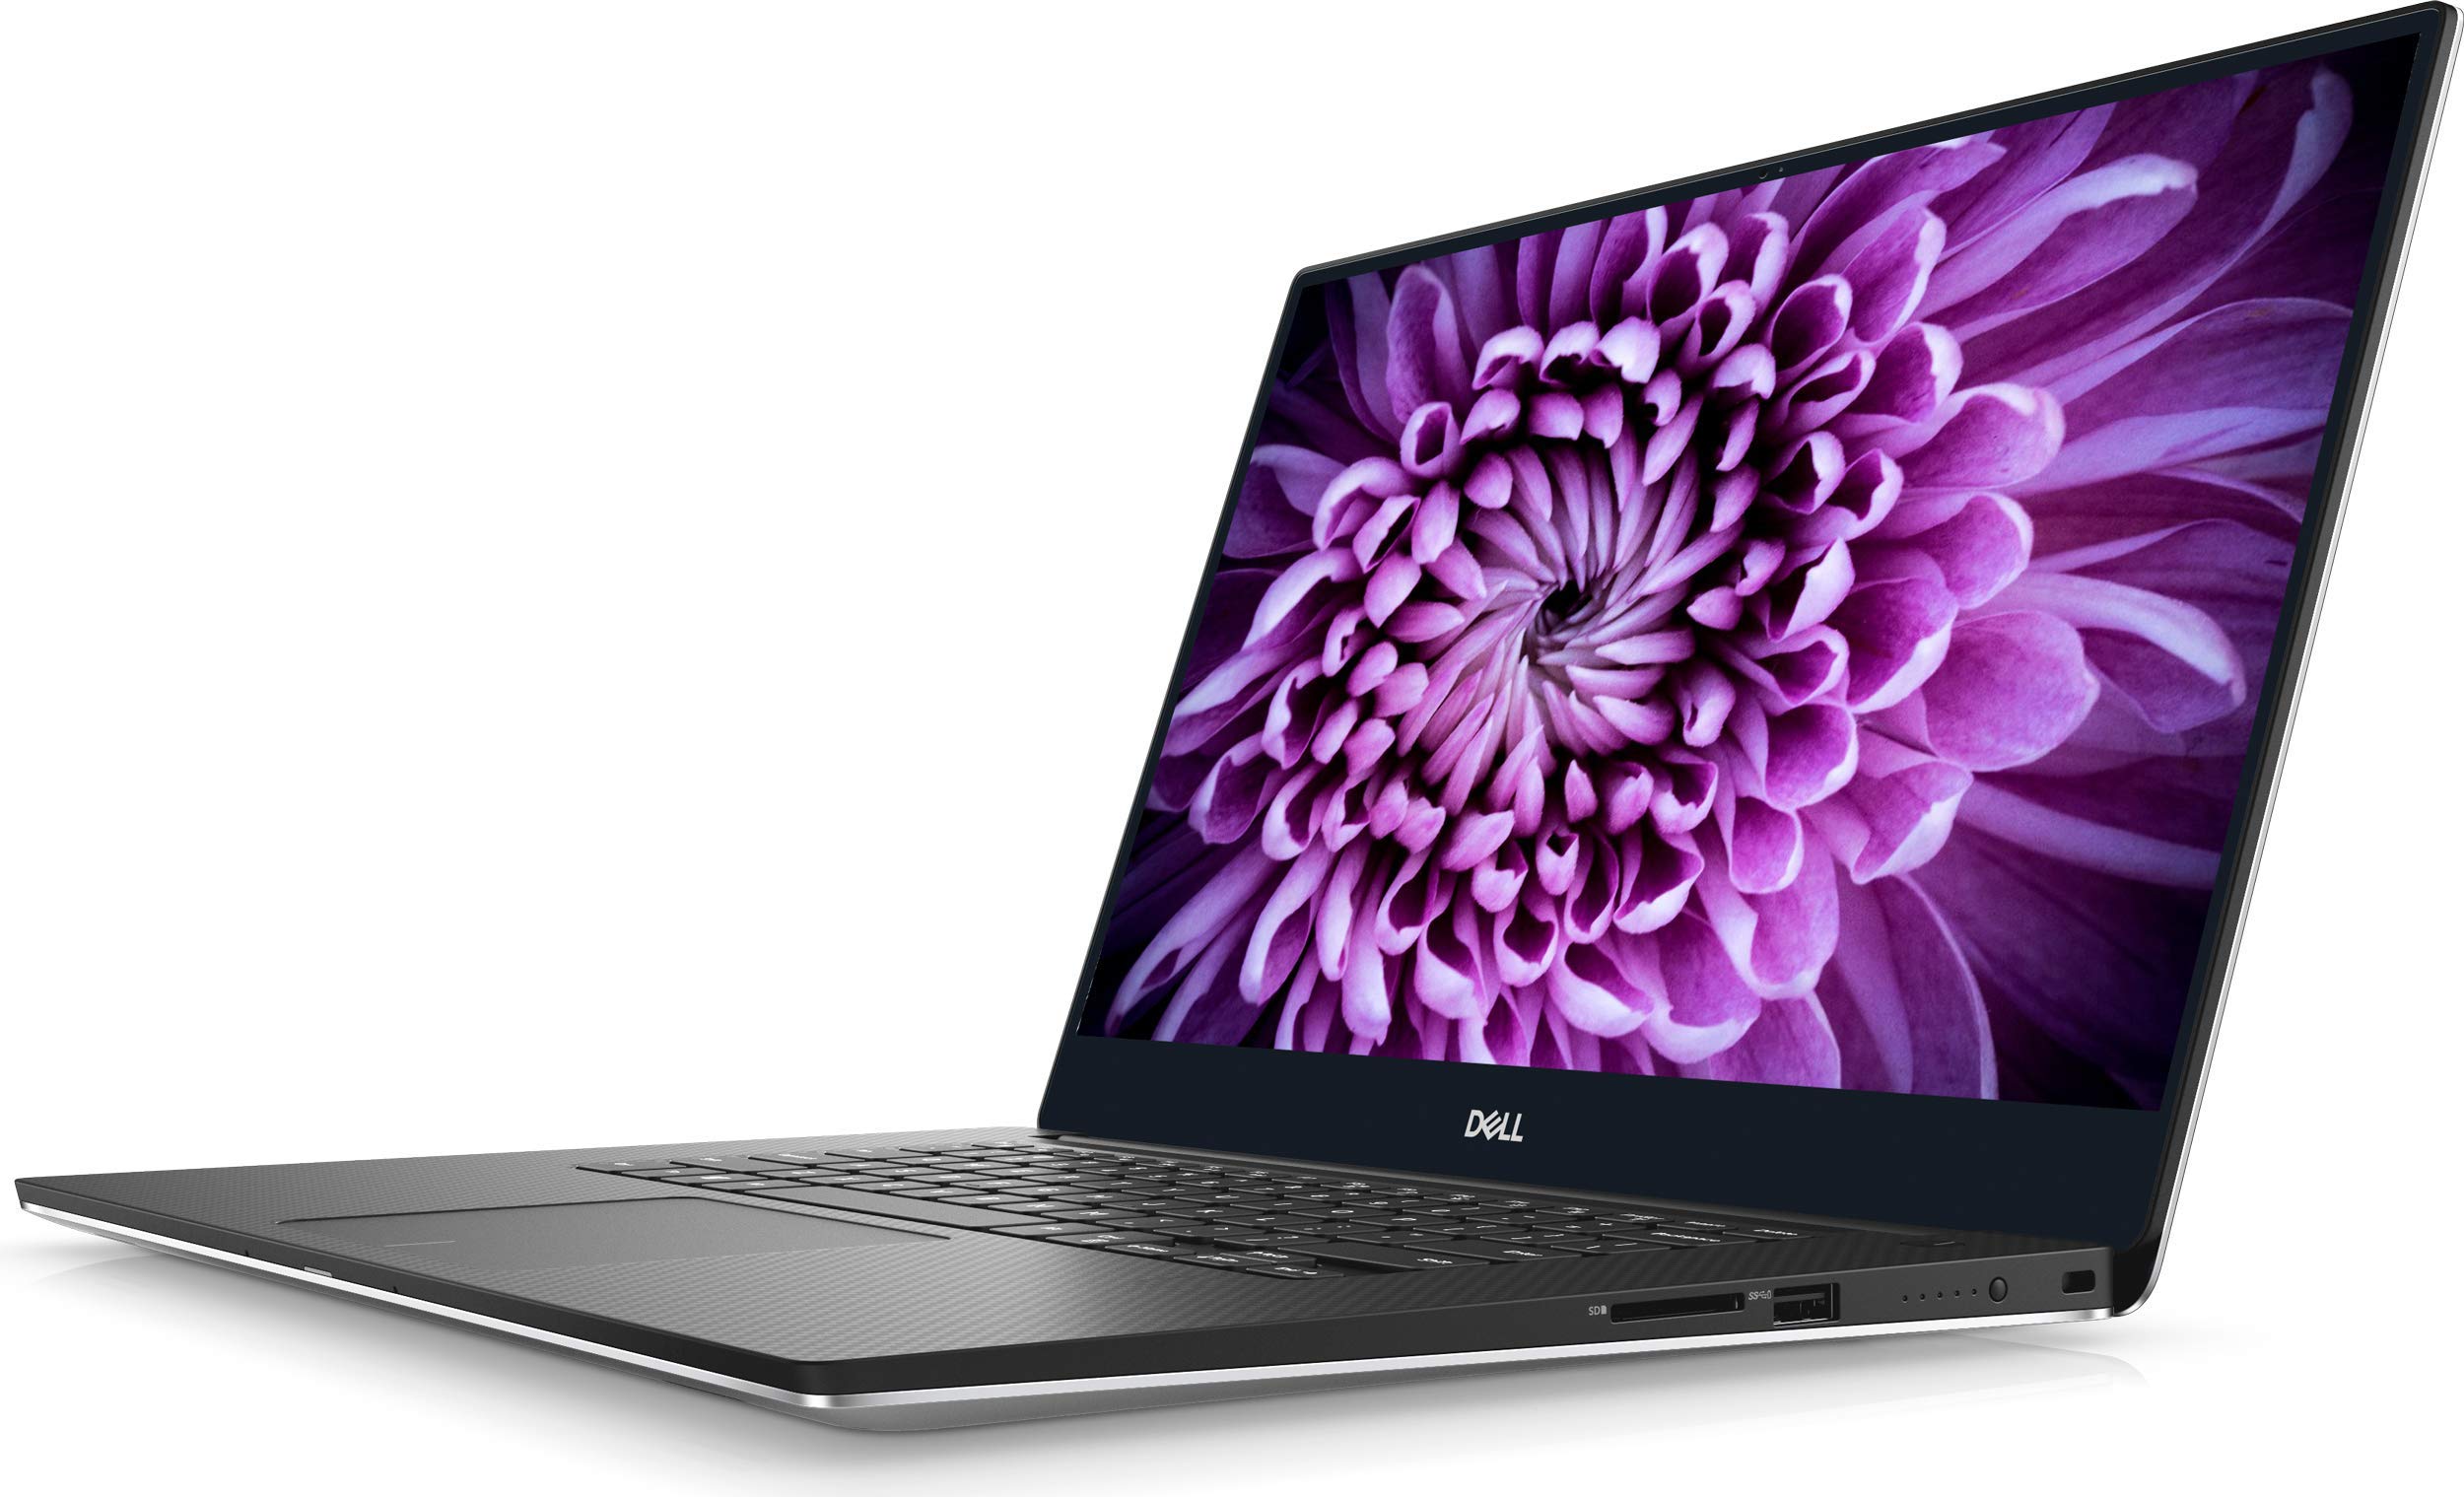 Dell 2019 XPS 15 7590 Laptop 15.6-inch Intel i7-9750H NVIDIA GTX 1650 512GB SSD 16GB RAM 4K UHD Non Touch (3840 x 2160) 400-Nits Windows 10 PRO (Renewed)